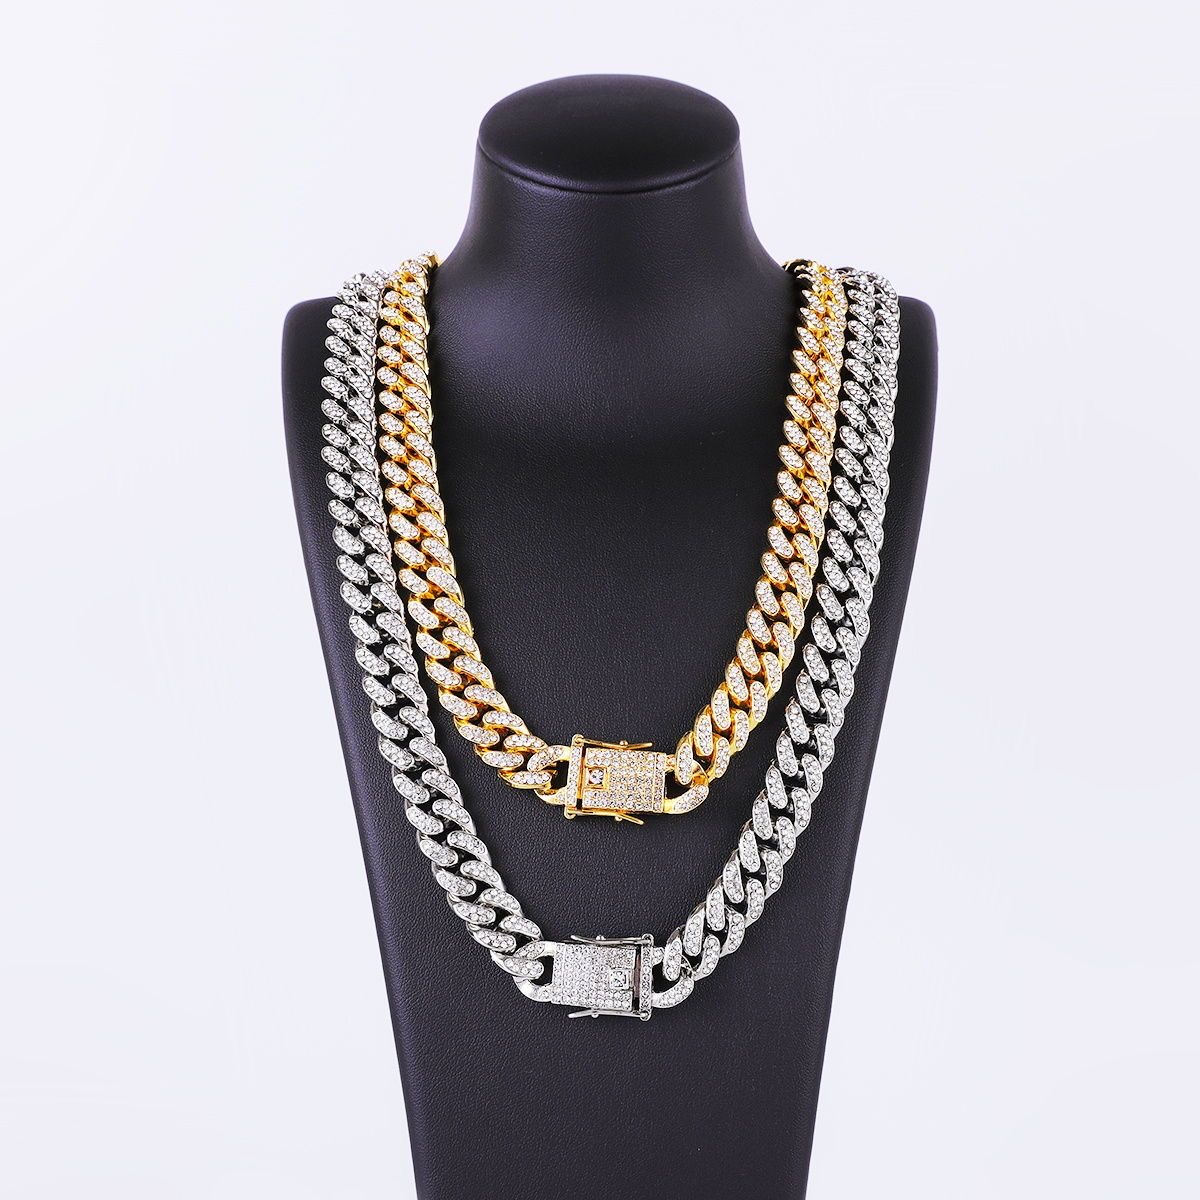 Men's Necklace Mosantine Chain 16MM VVS Full Diamond Gold Color Chain 925 Sterling Silver Miami Cuban Chain Hip Hop Style Fashion Designer